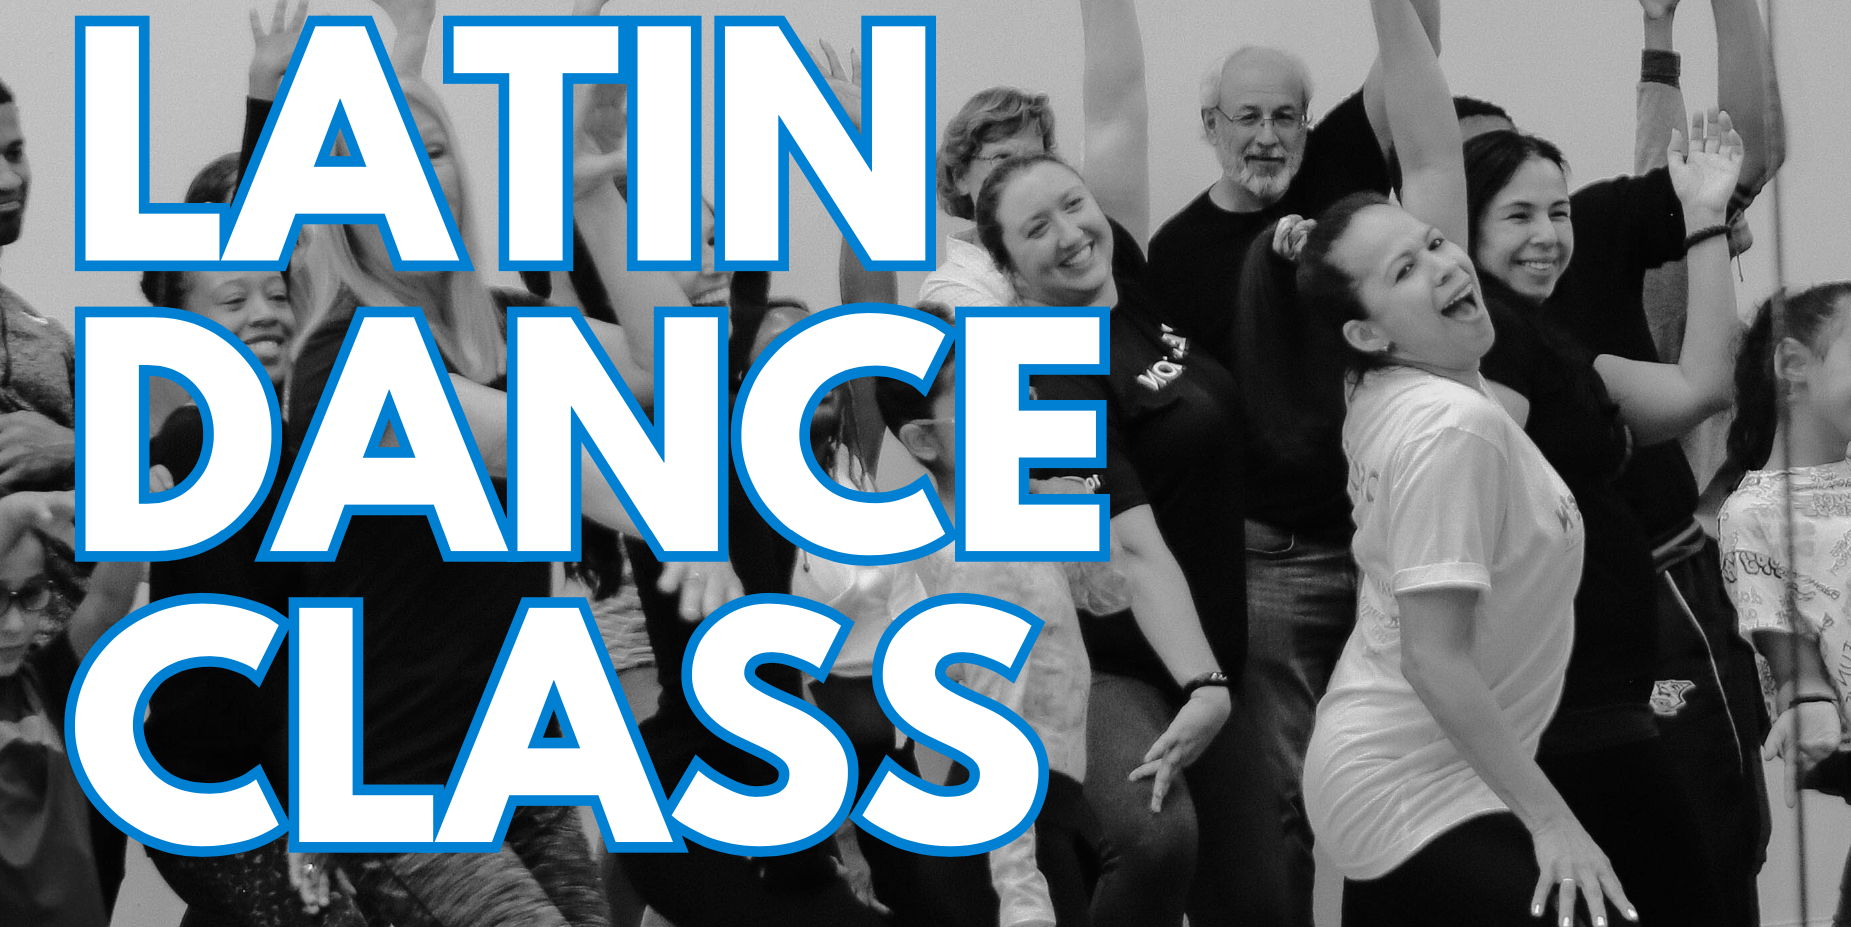 Latin Dance Class promotional image